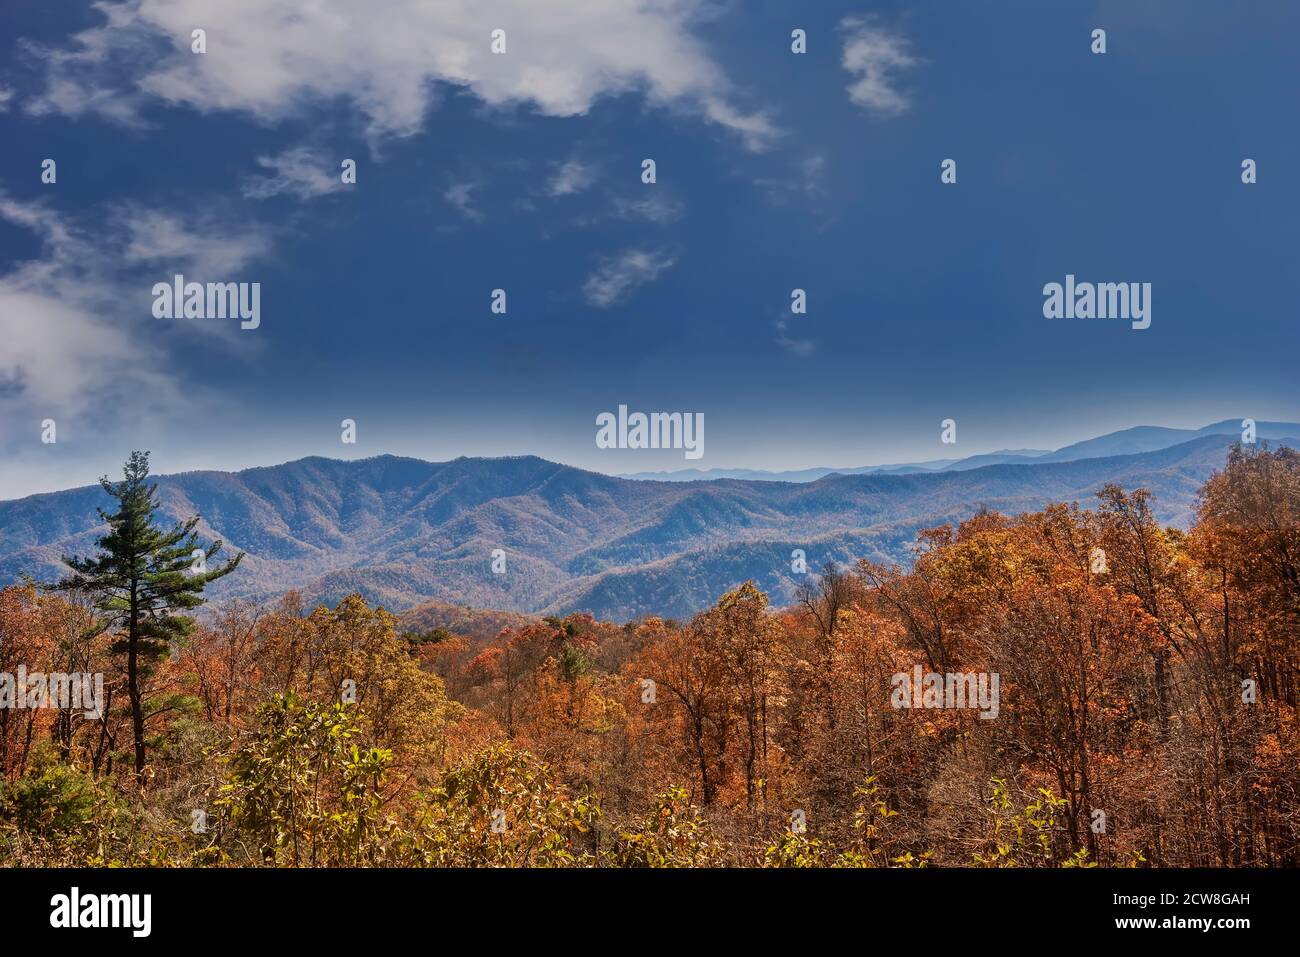 Autumn colors and the Blue Ridge Mountain range in North Carolina. Stock Photo